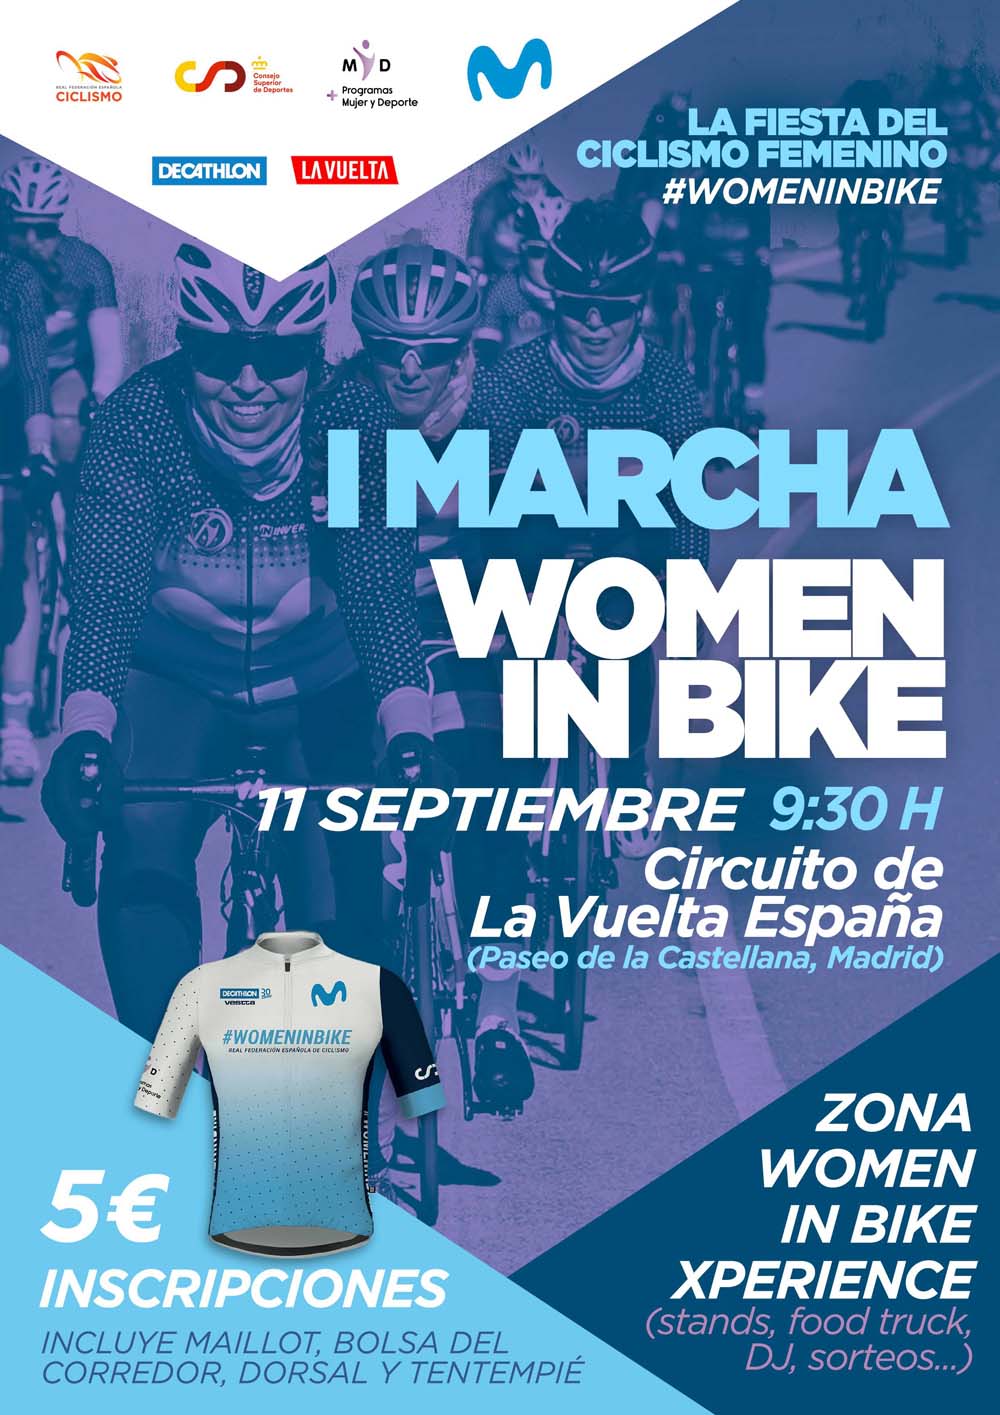 La RFEC organiza la I Marcha Women In Bike, la fiesta del ciclismo femenino